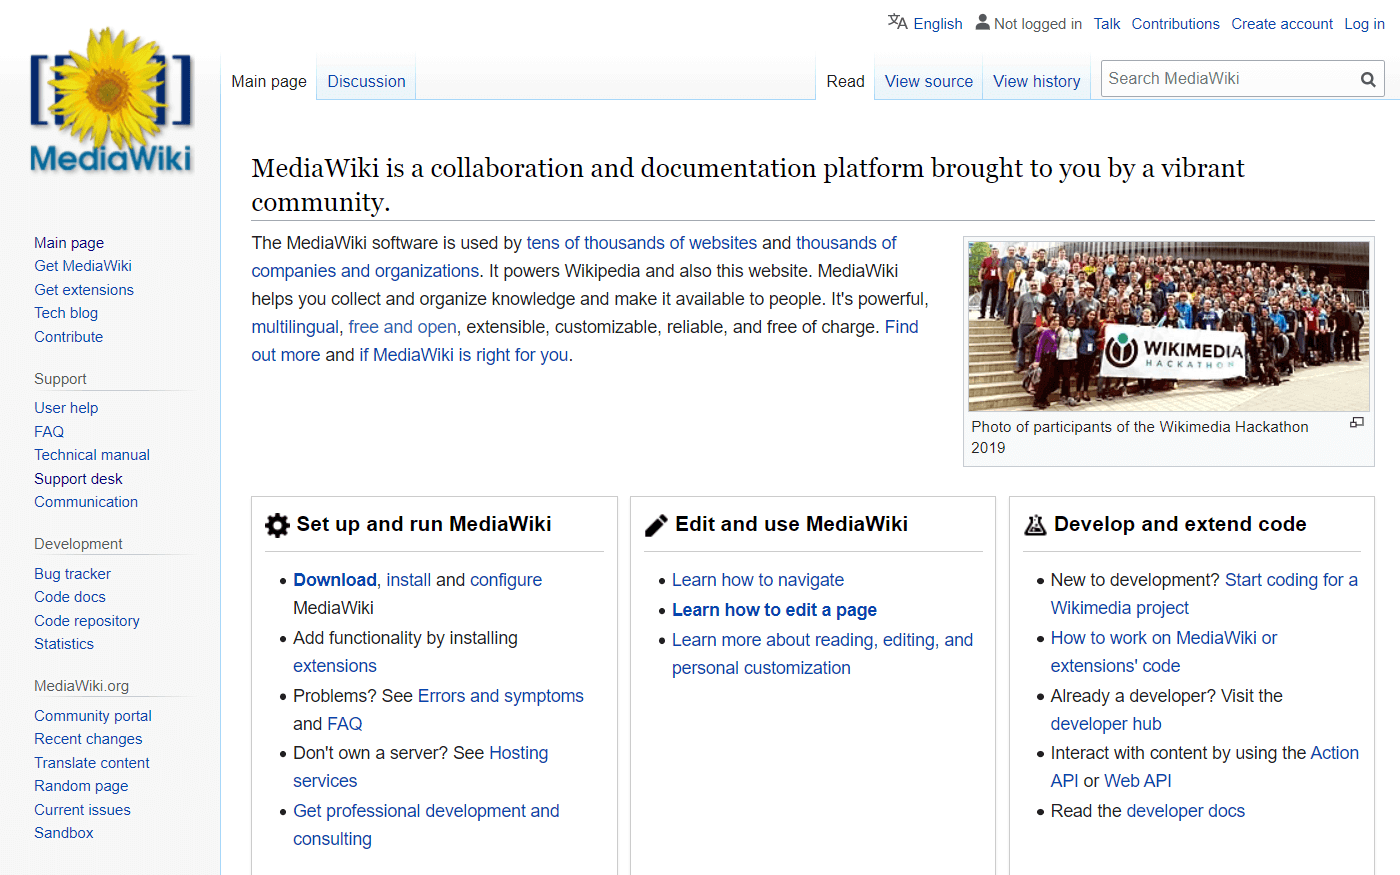 Private wiki software MediaWiki